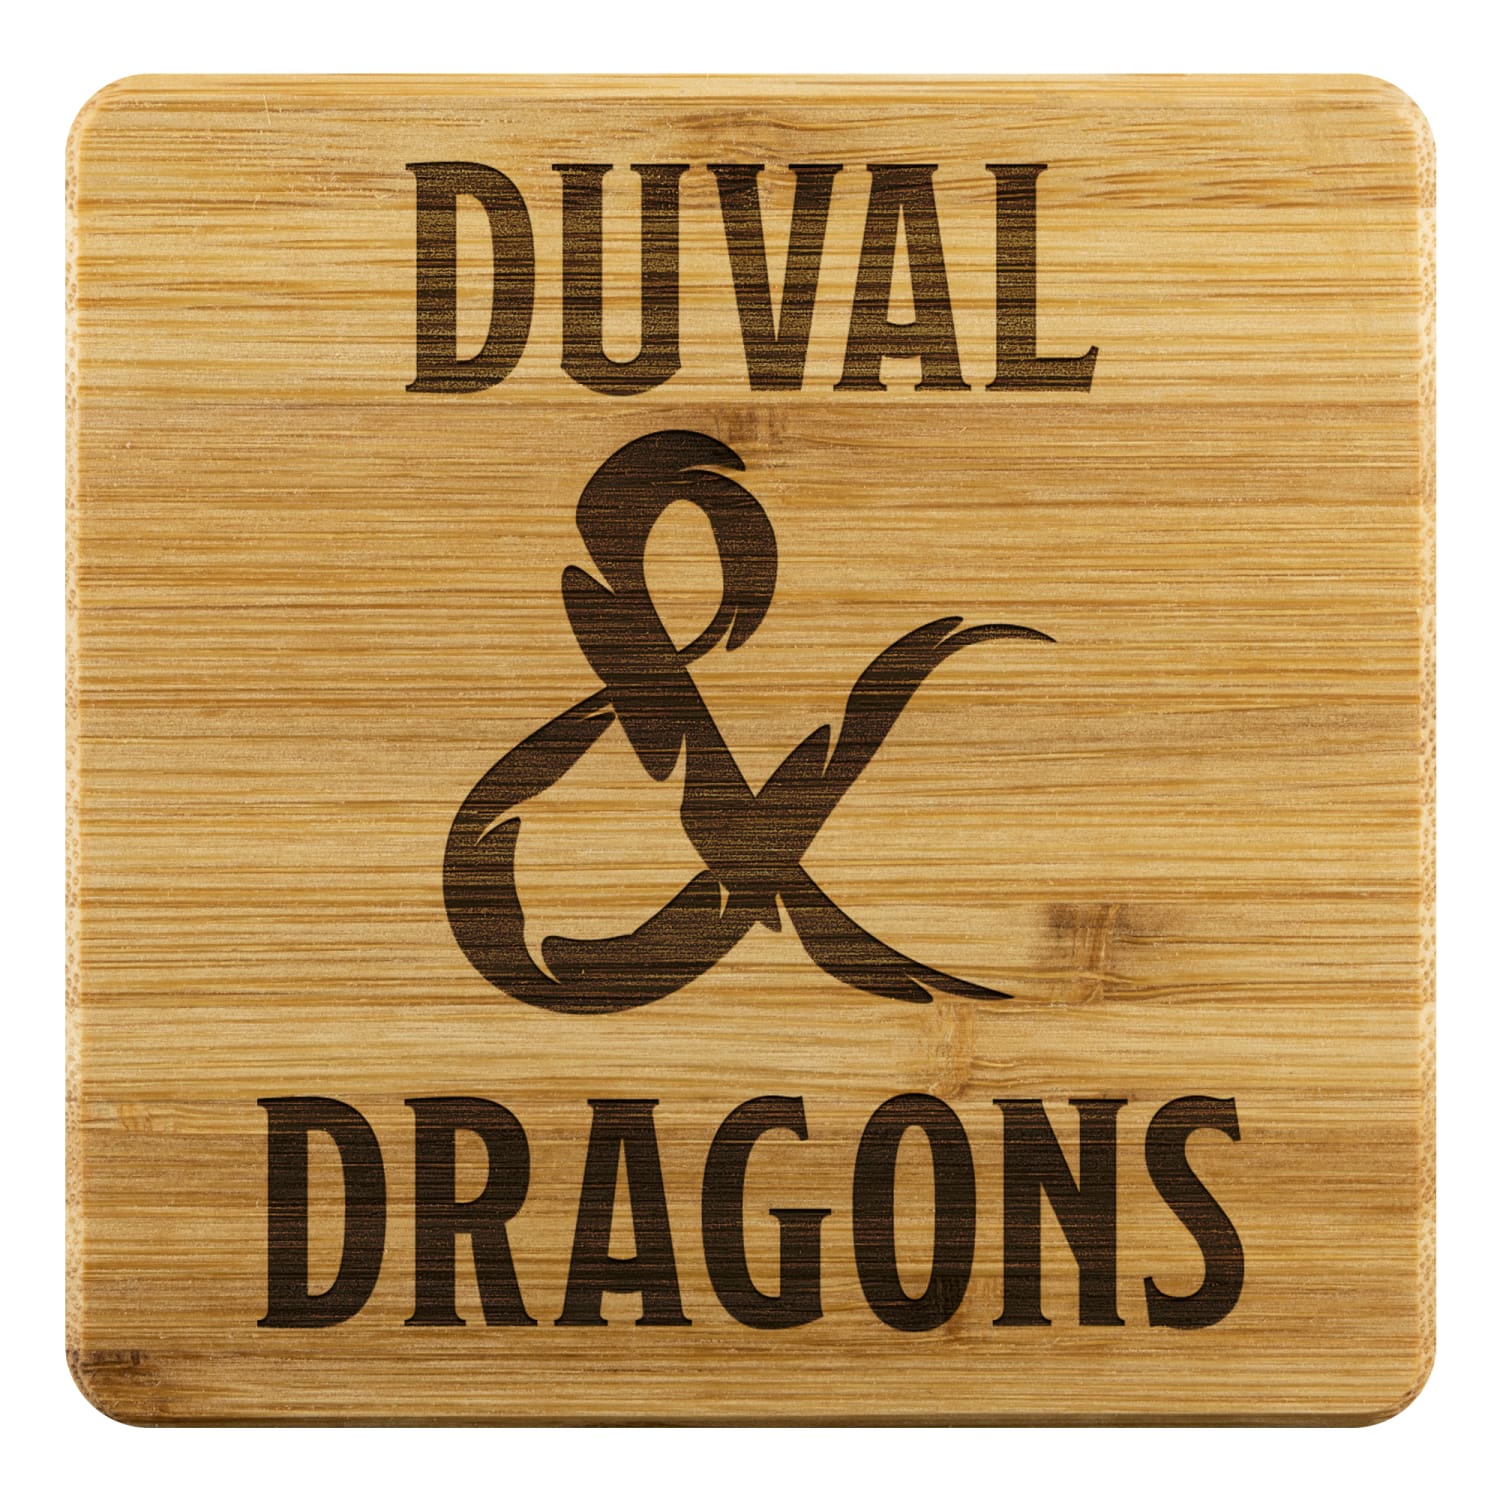 Duval & Dragons Logo Bamboo Coaster Set of 4 - Bamboo Coaster - 4pc - Coasters